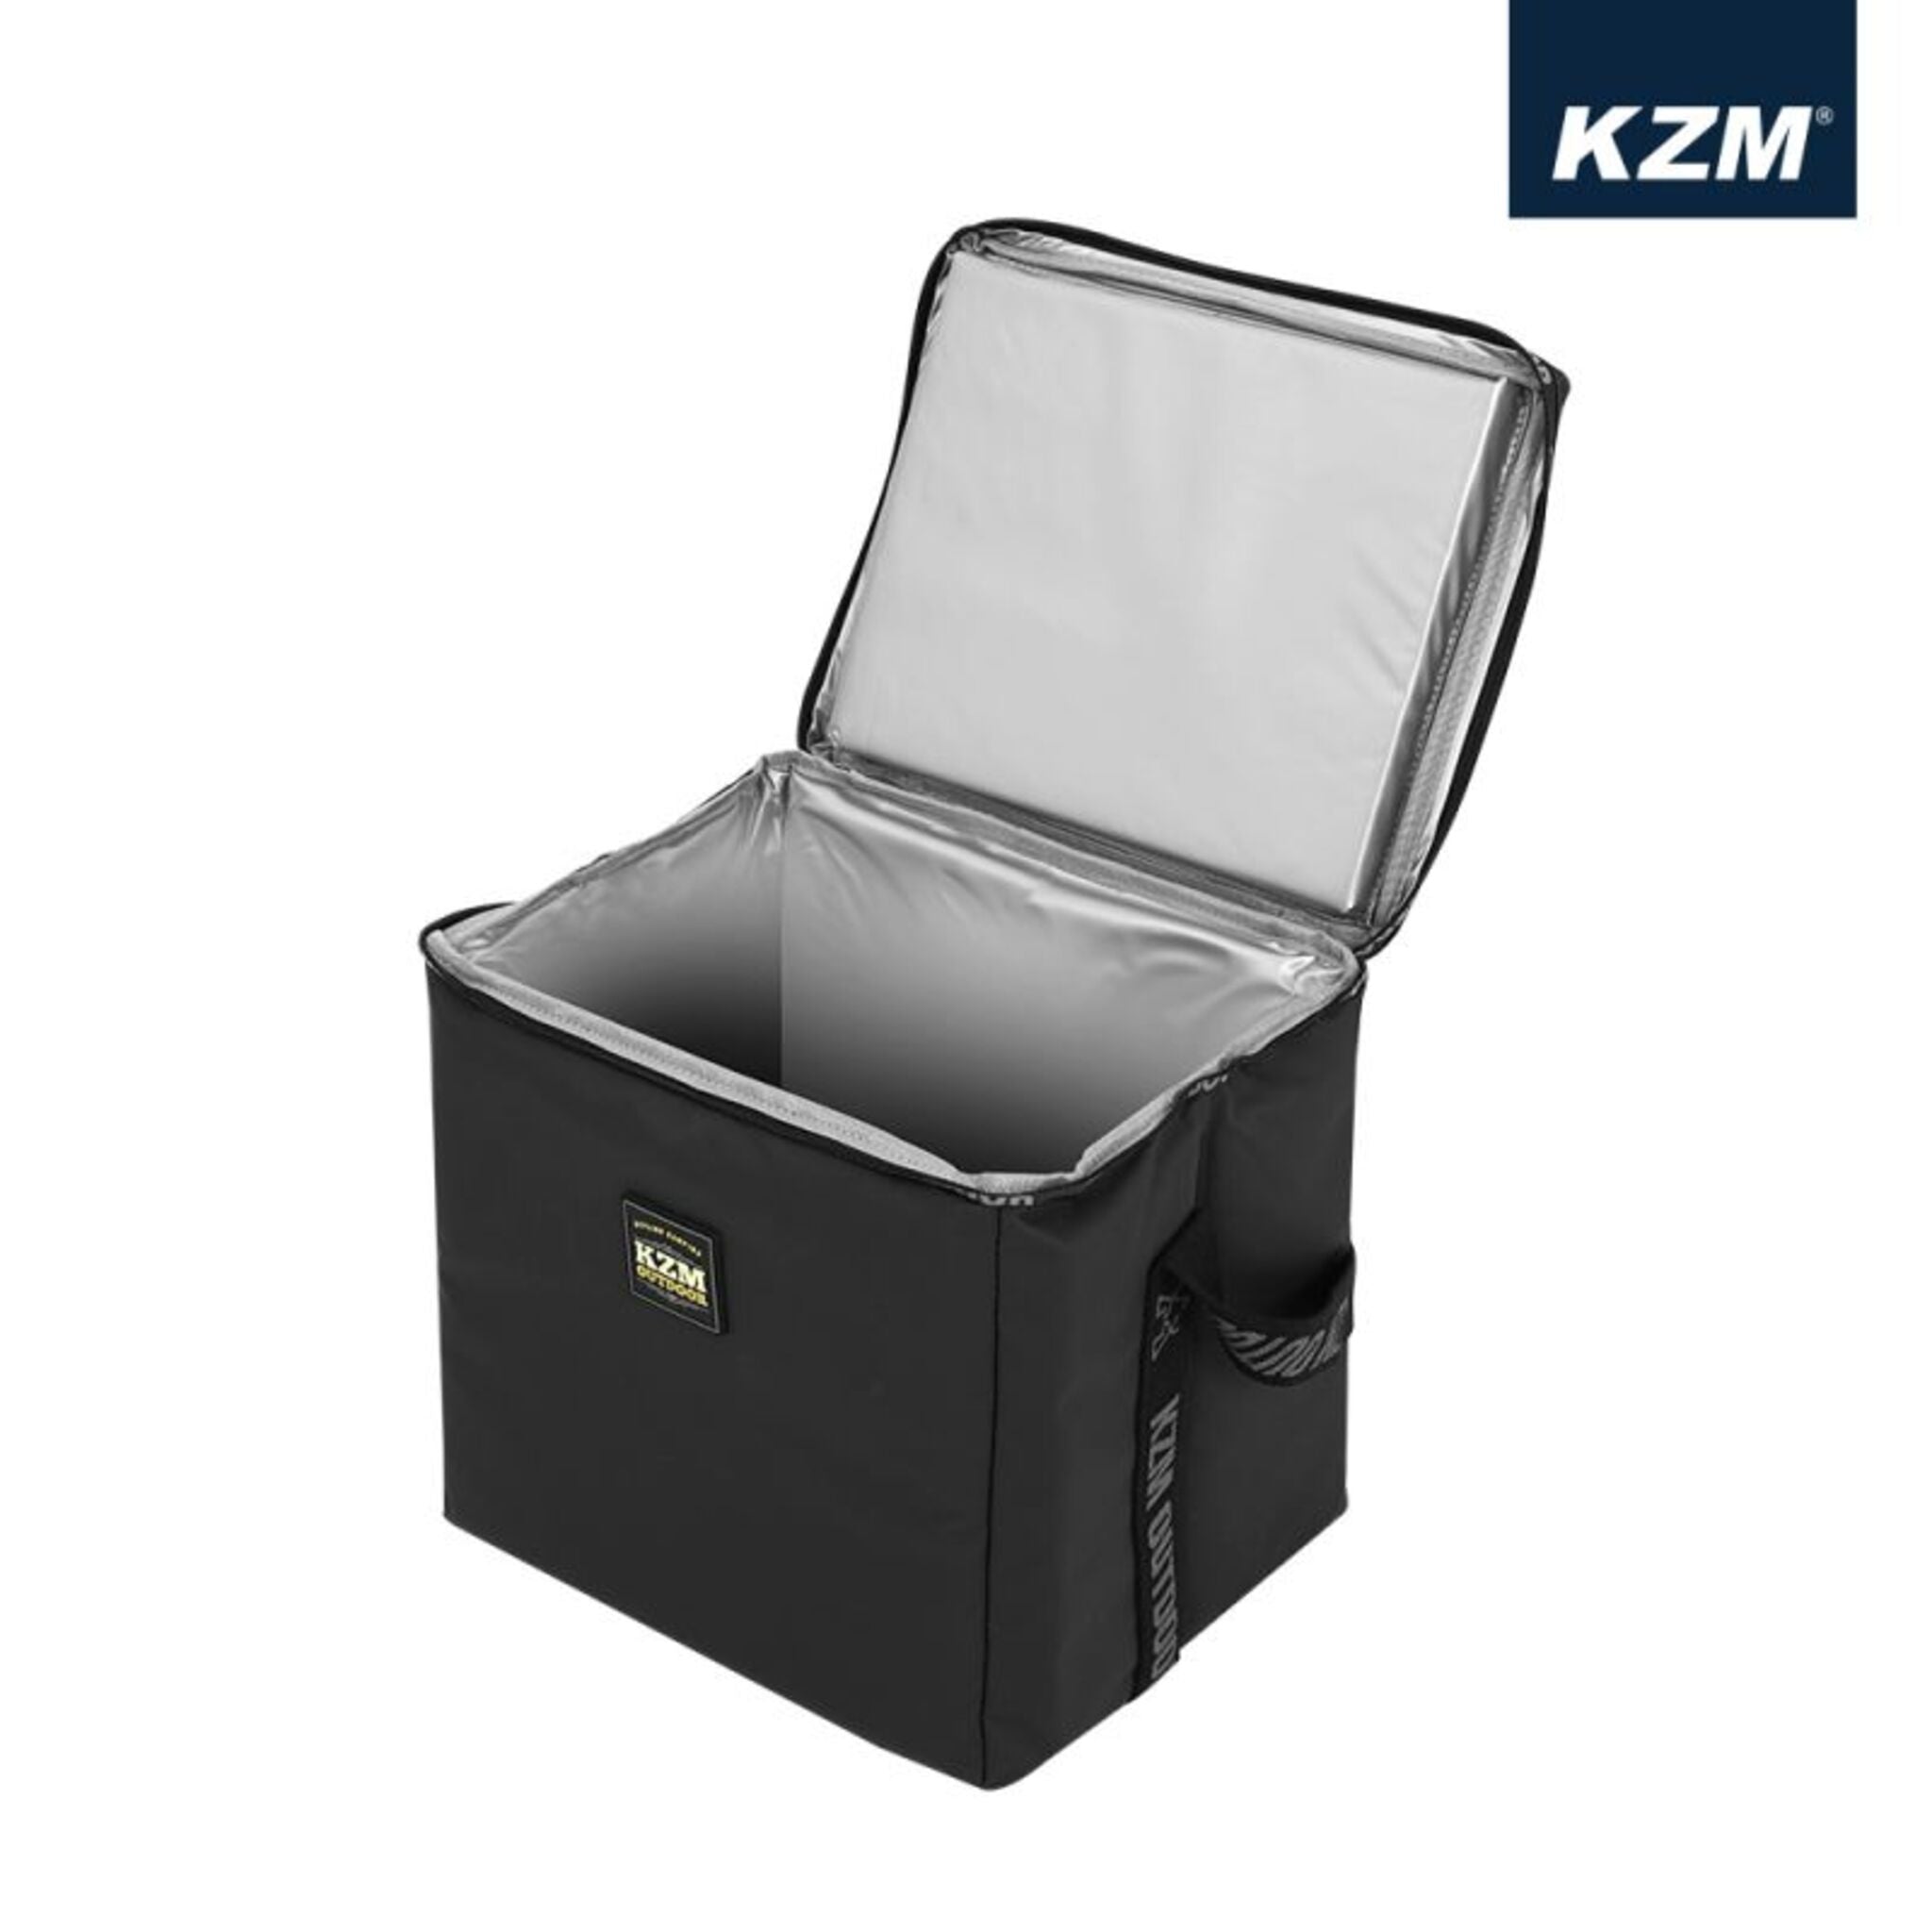 KAZMI KZM 工業風裝備收納袋18L 裝備袋收納包K23T3B06